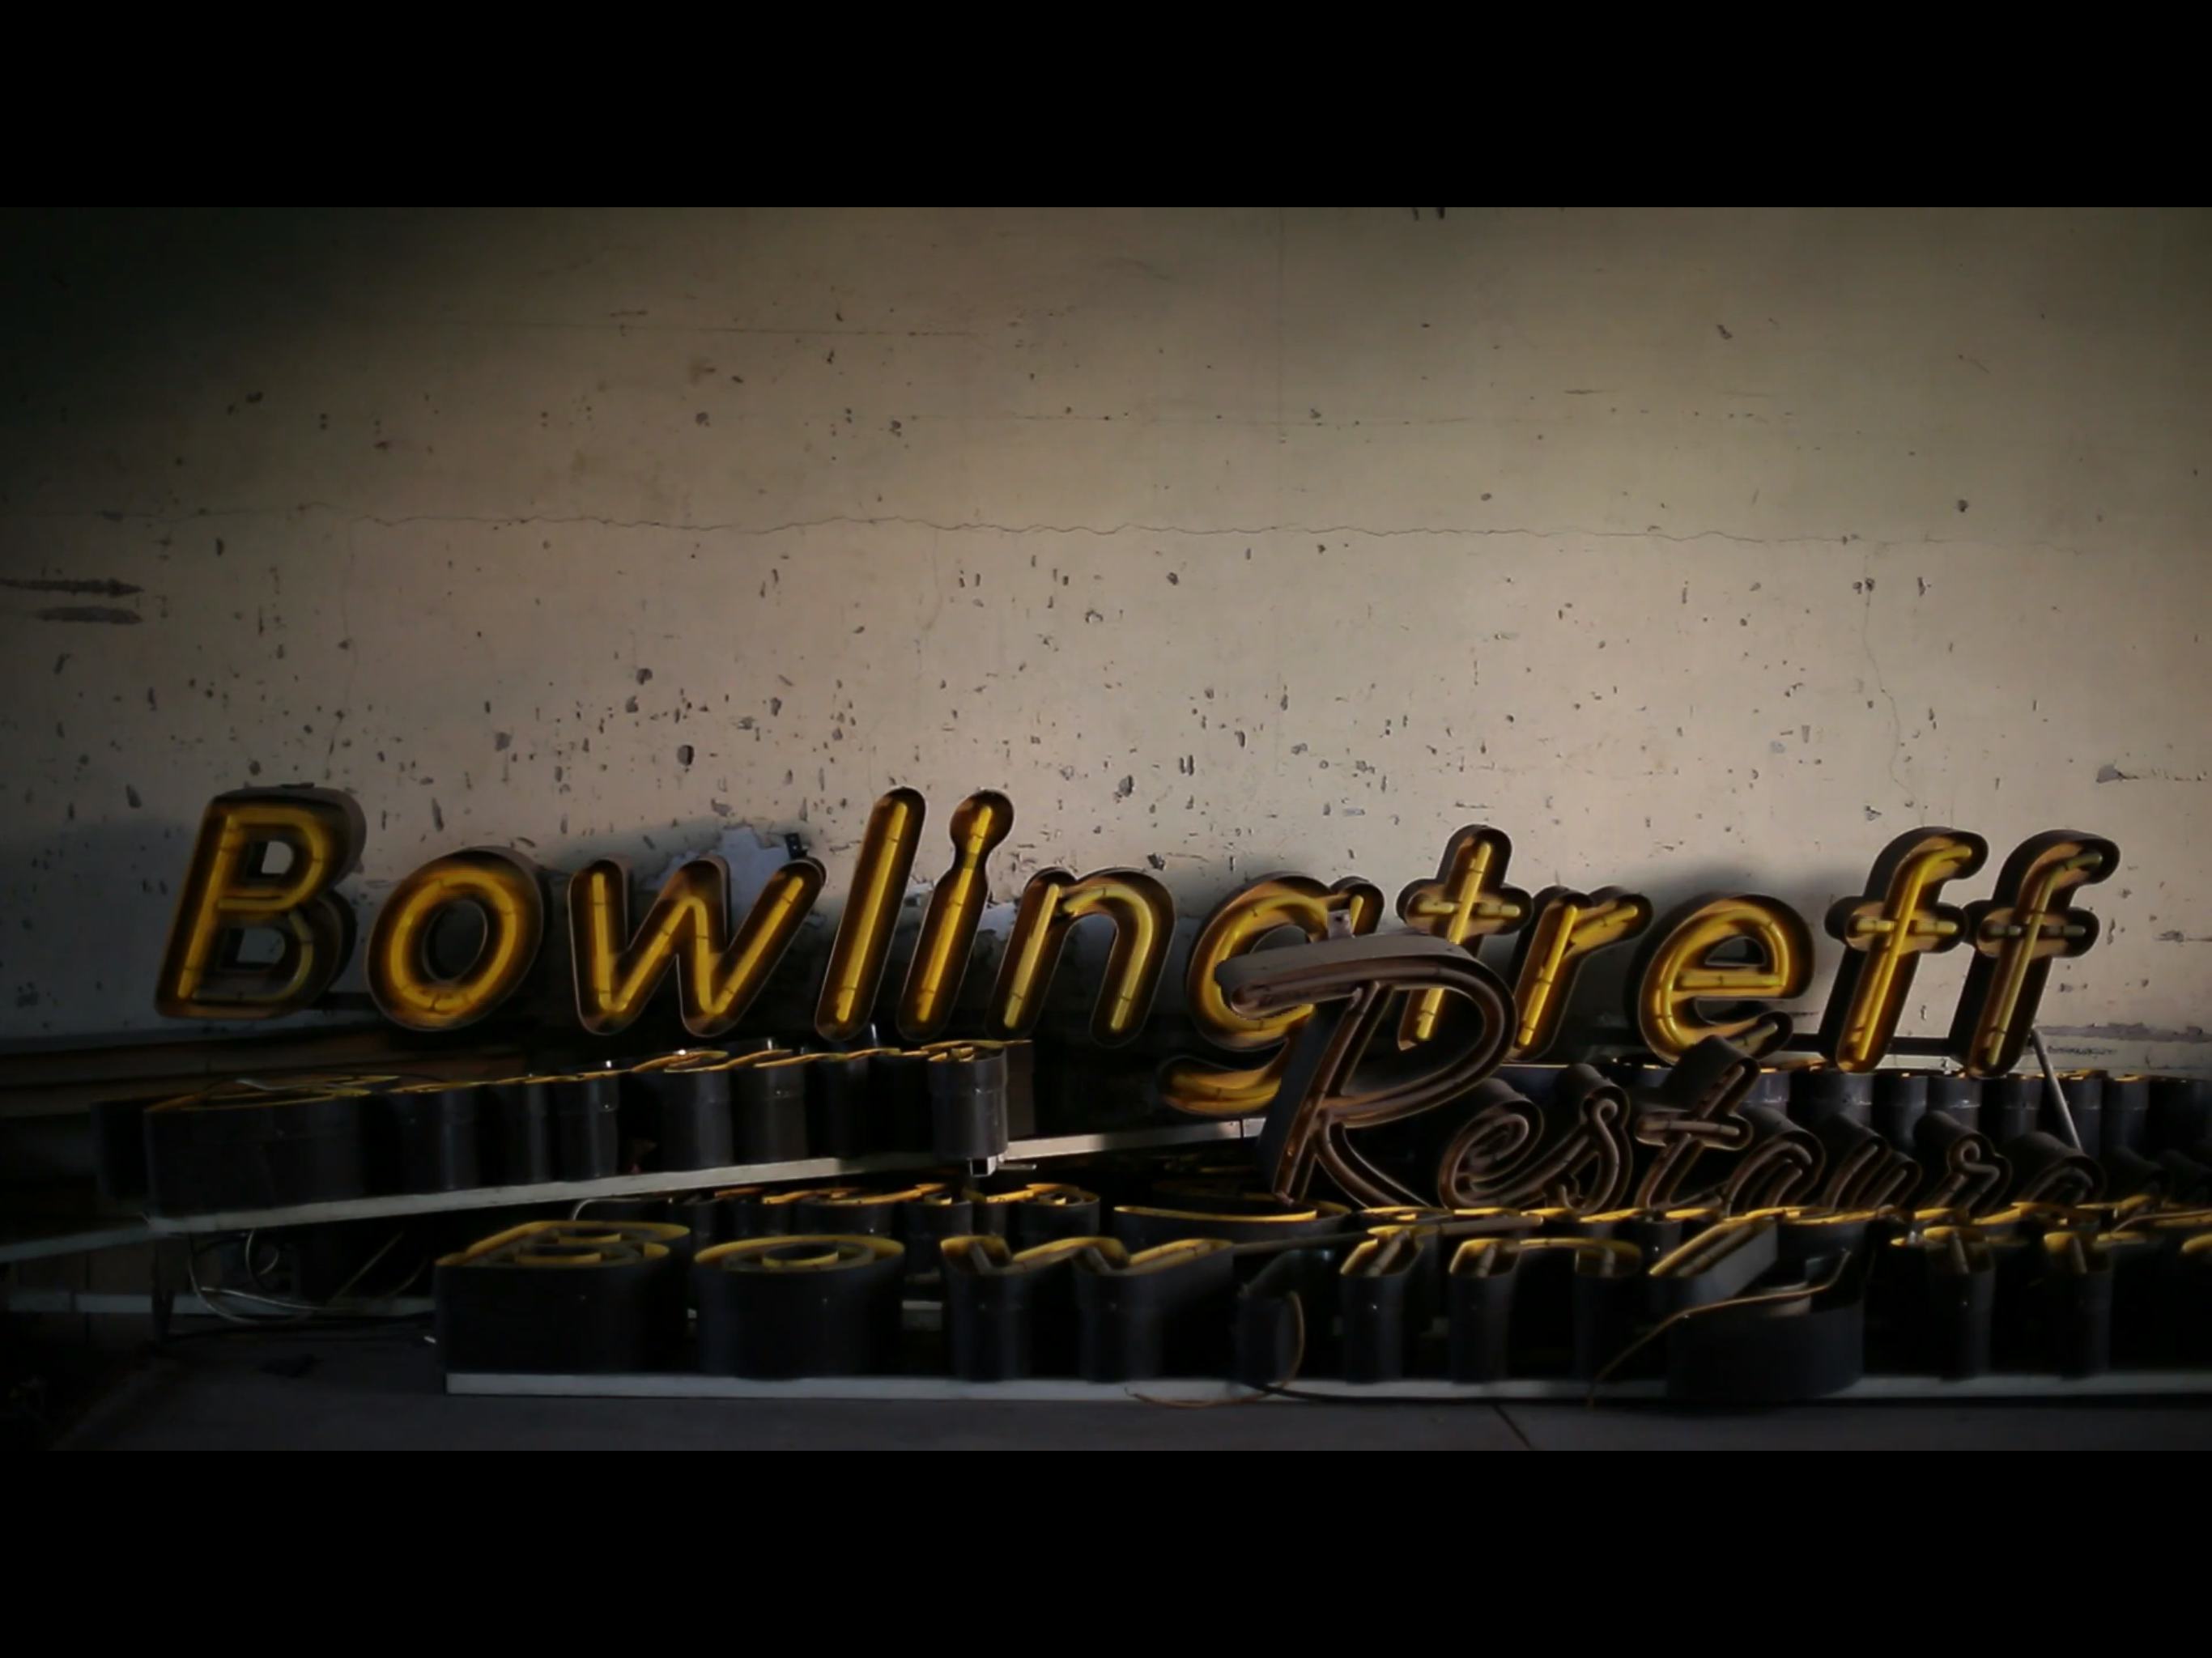 Filmtip AFFR: Bowlingtreff in de DDR